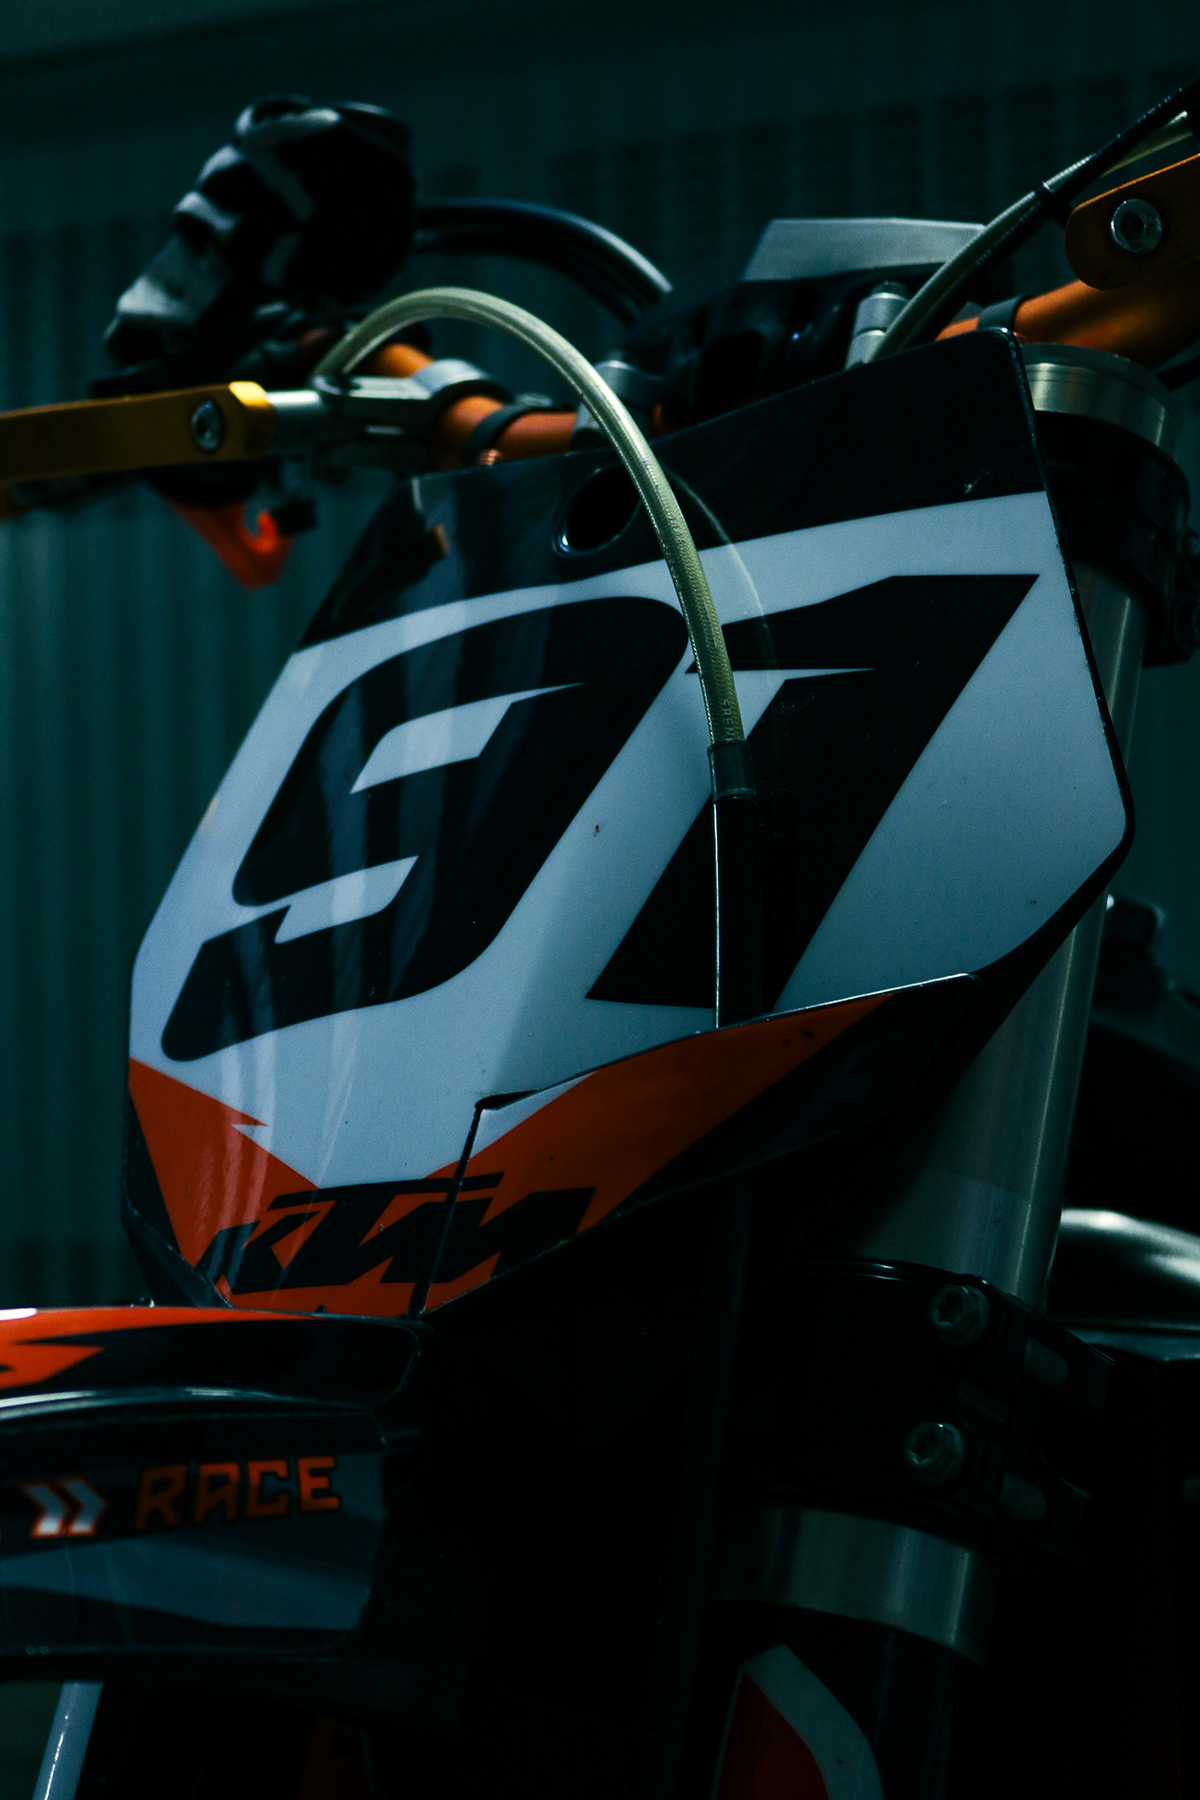 ктм SMR motard moto pista garage shooting Ready to race faba KTM RACING ktm450 xc